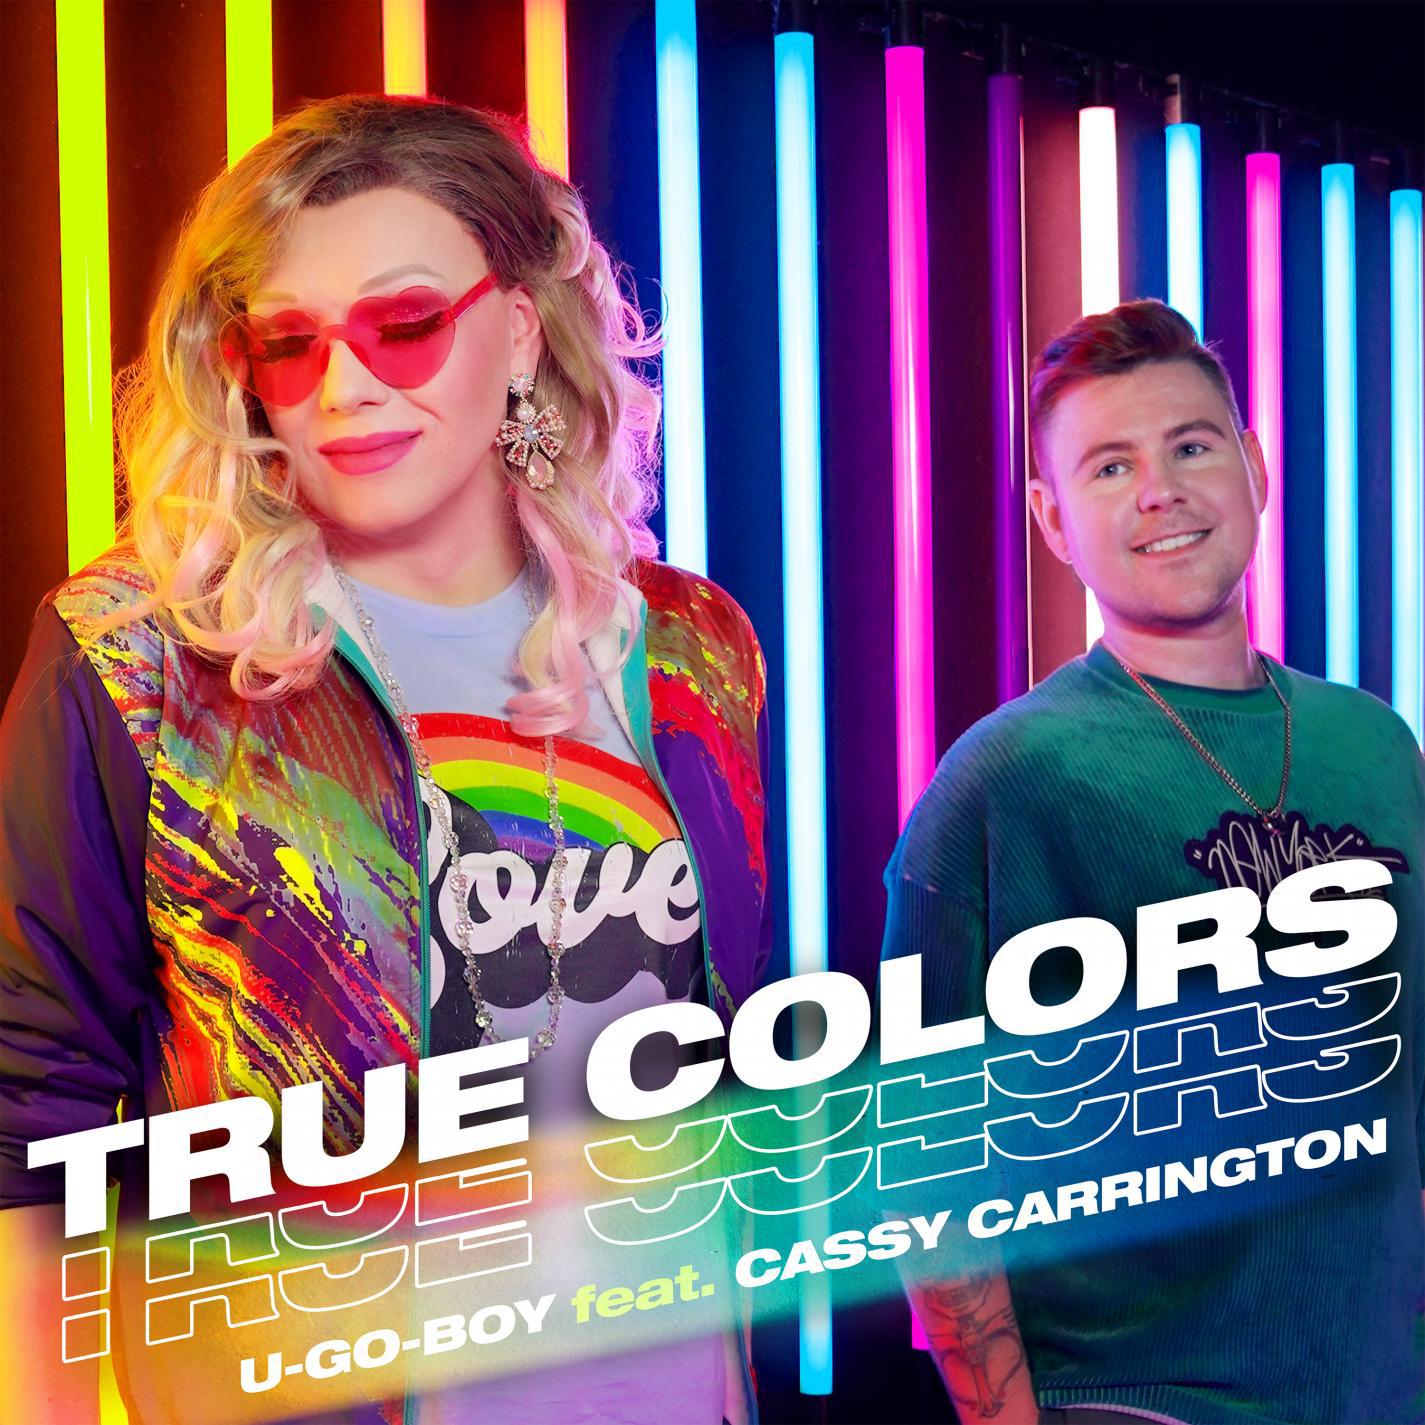 U-GO-BOY - True Colors (feat. Cassy Carrington)